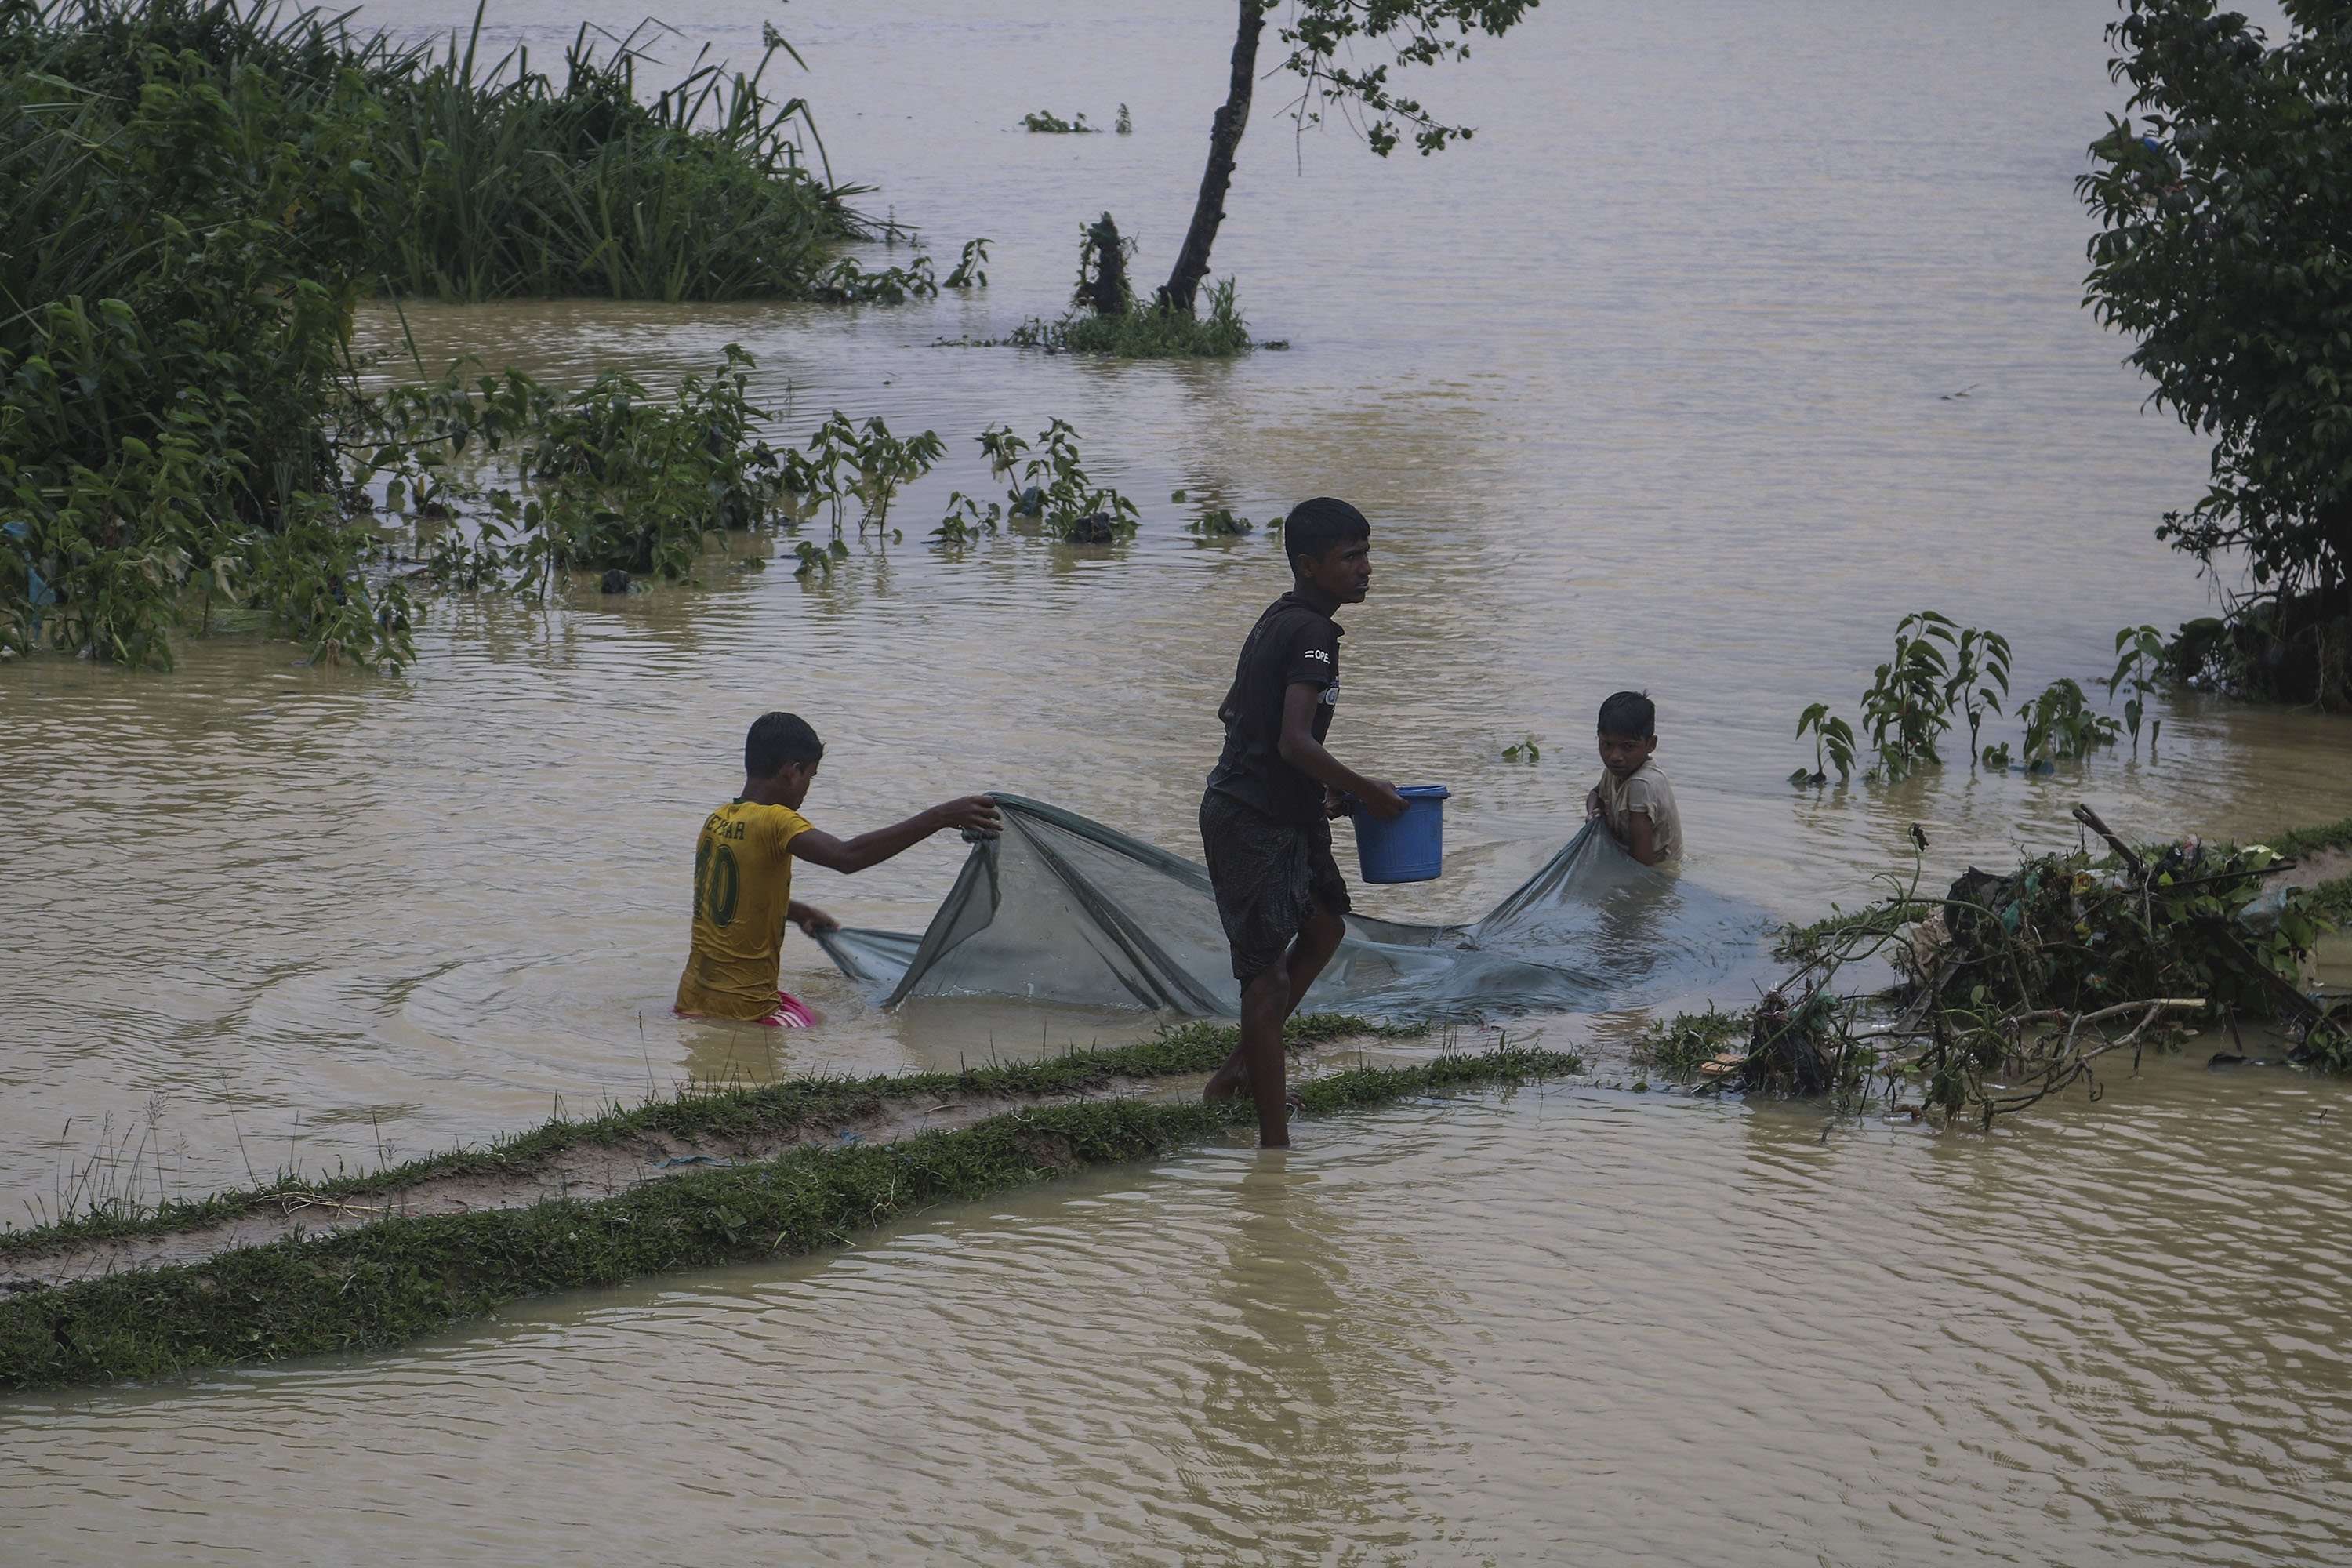 case study flooding in bangladesh